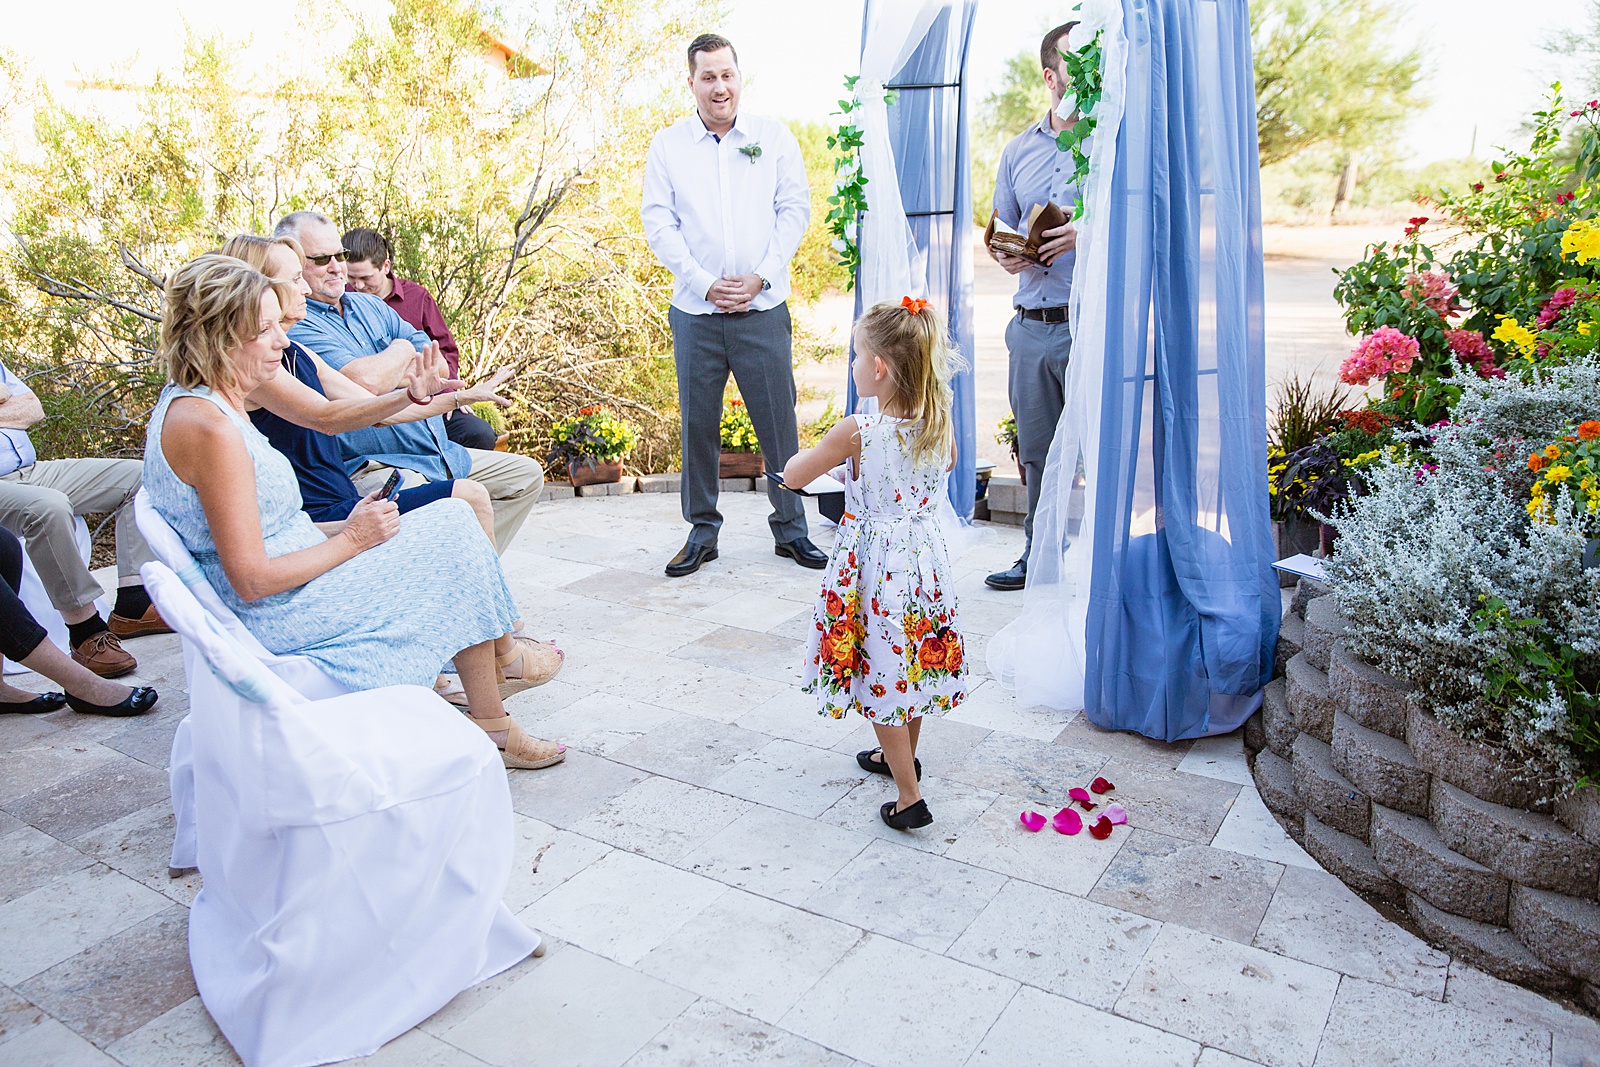 Flower girl walking down aisle during a backyard wedding ceremony by Phoenix wedding photographer PMA Photography.